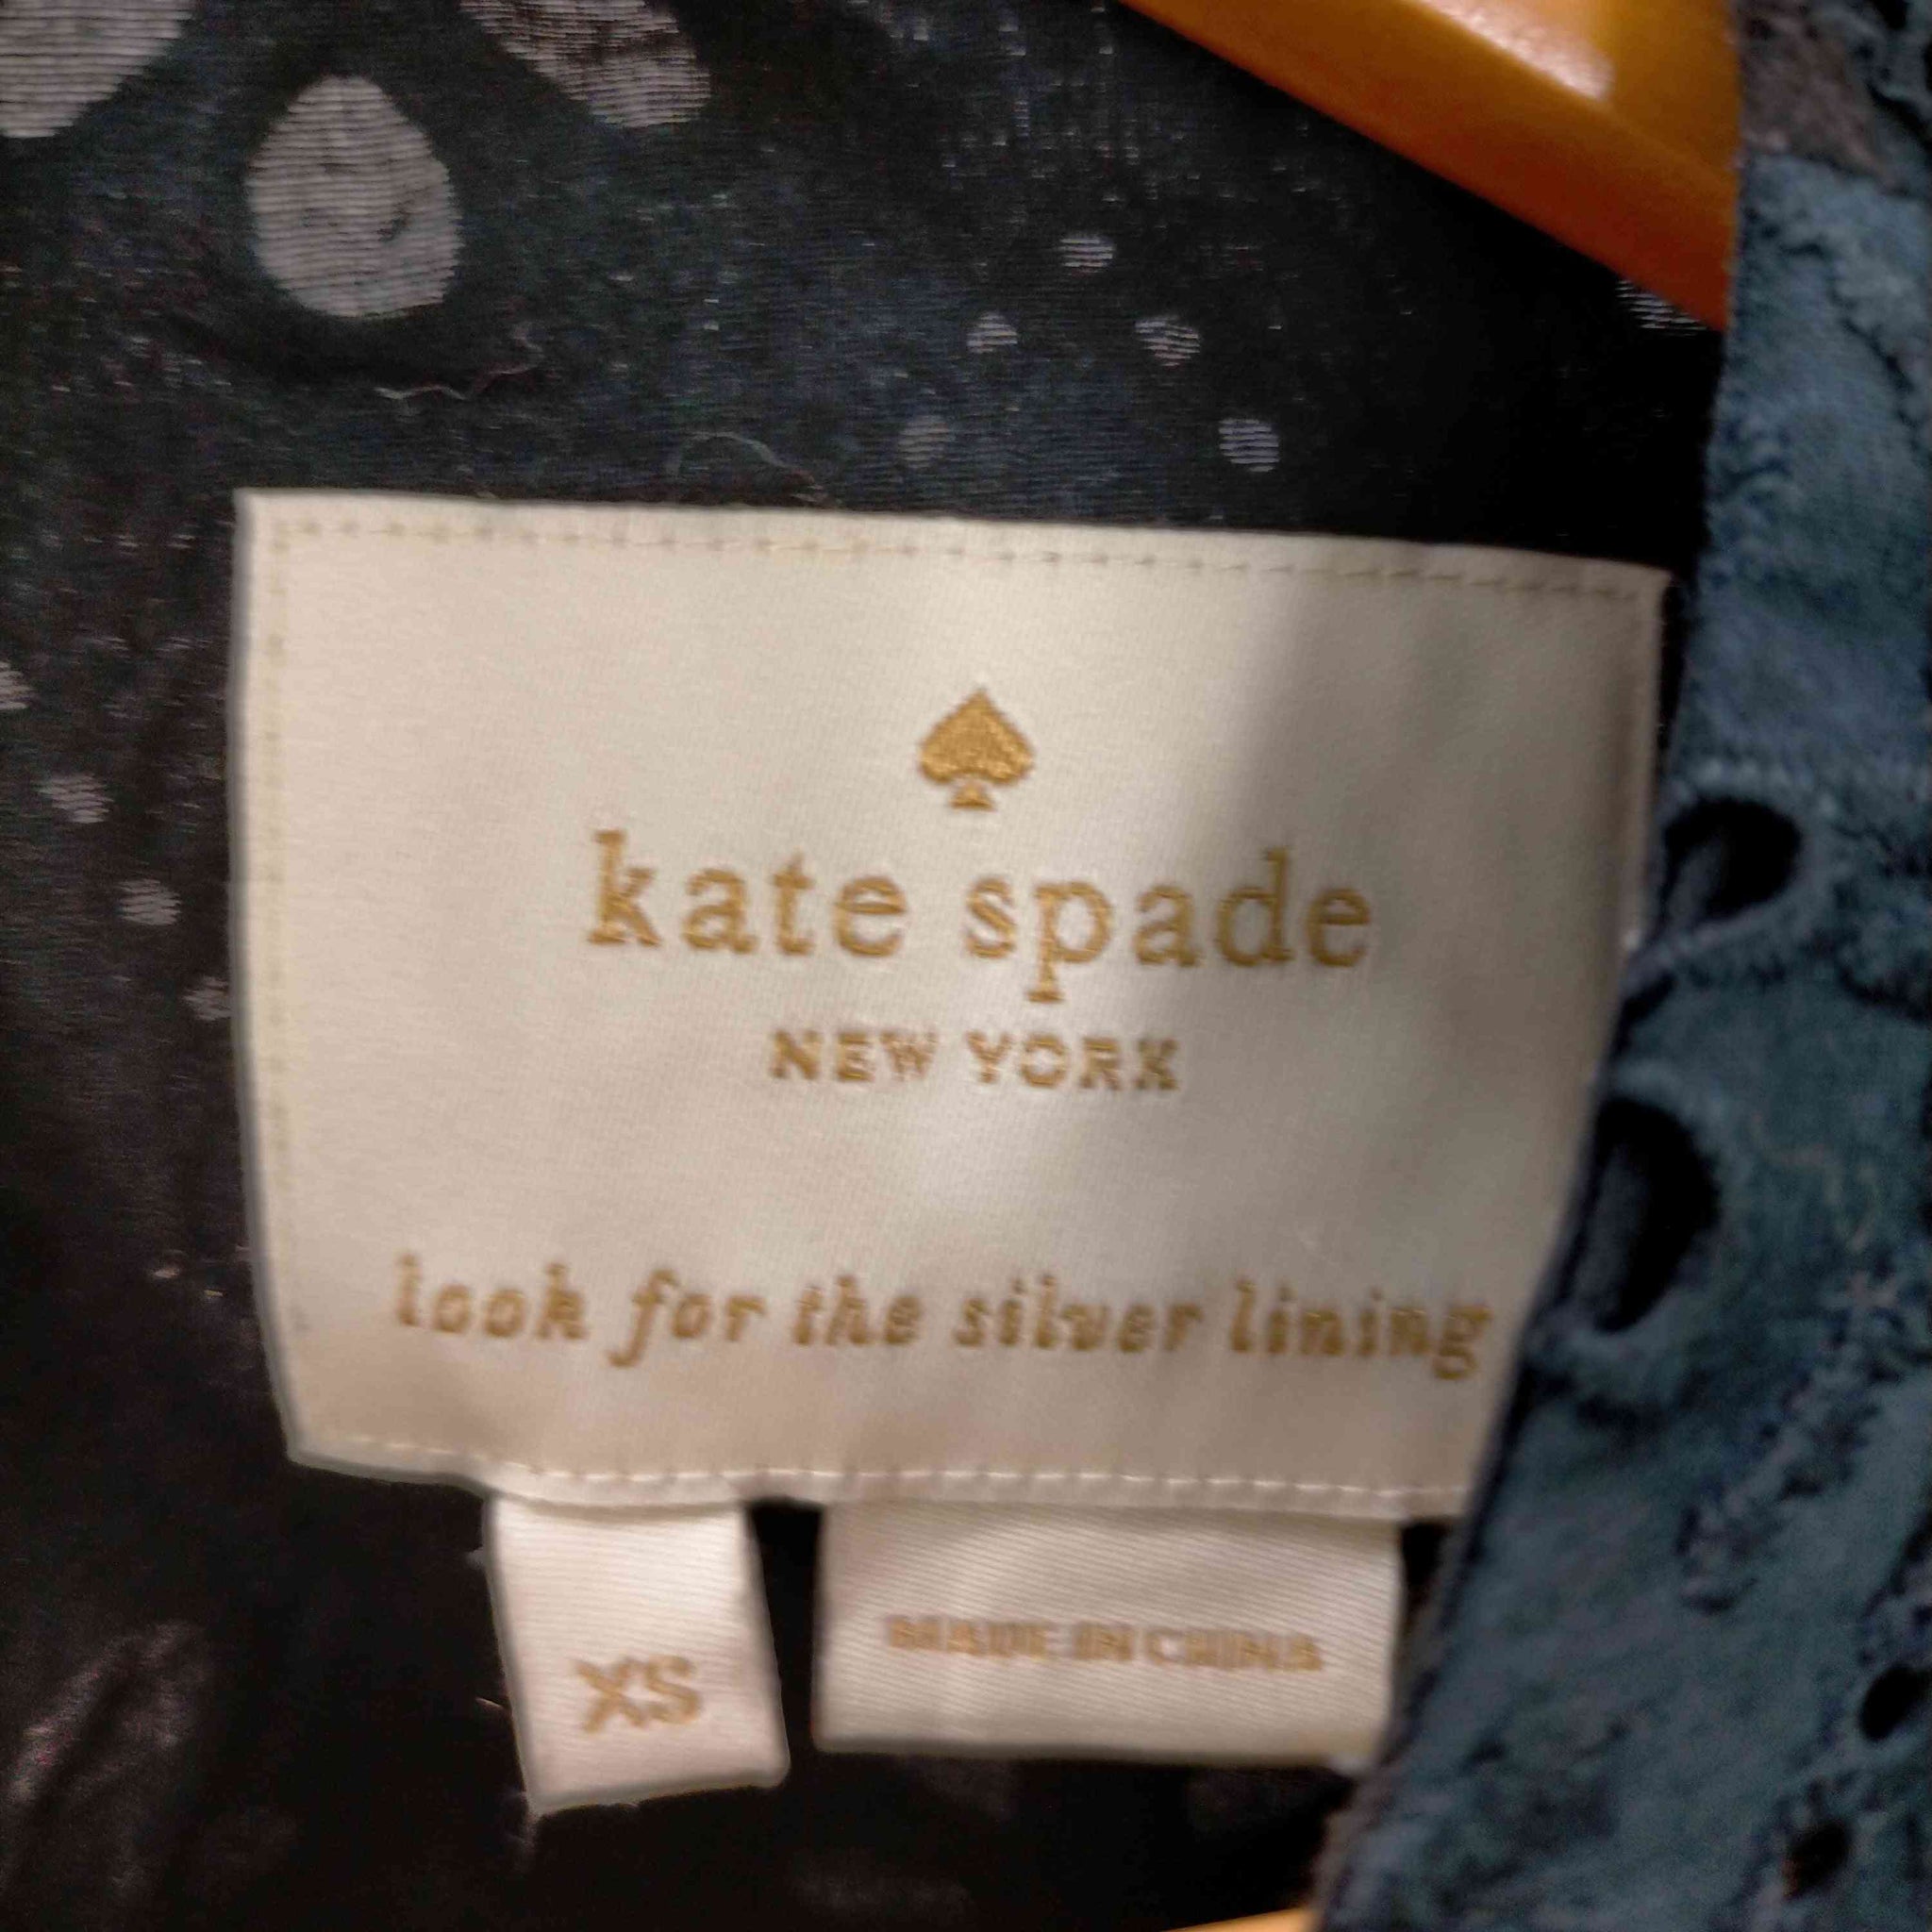 Kate spade(ケイトスペード)カットワークワンピース